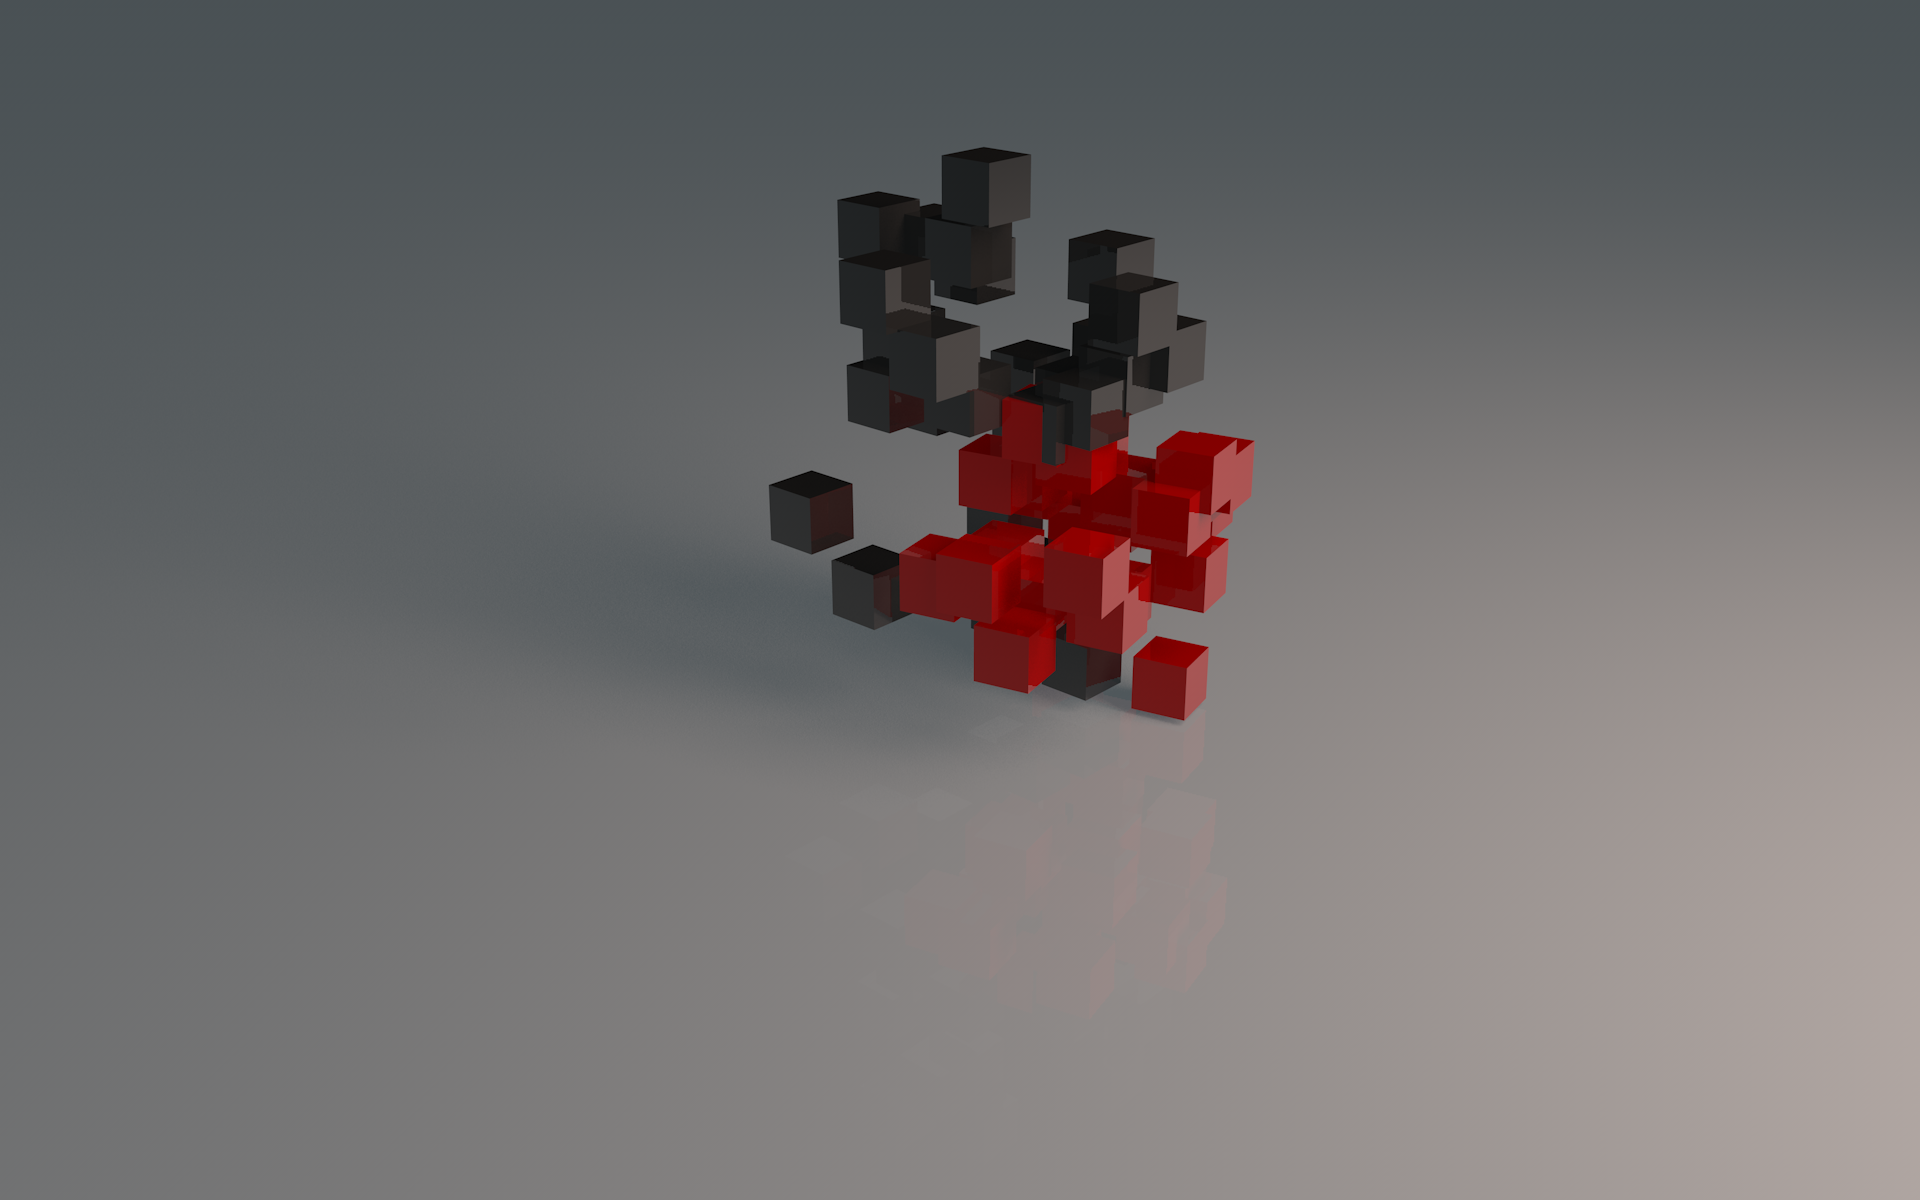 General 1920x1200 CGI 3D Blocks digital art simple background 3D Abstract minimalism gradient black red cube geometric figures